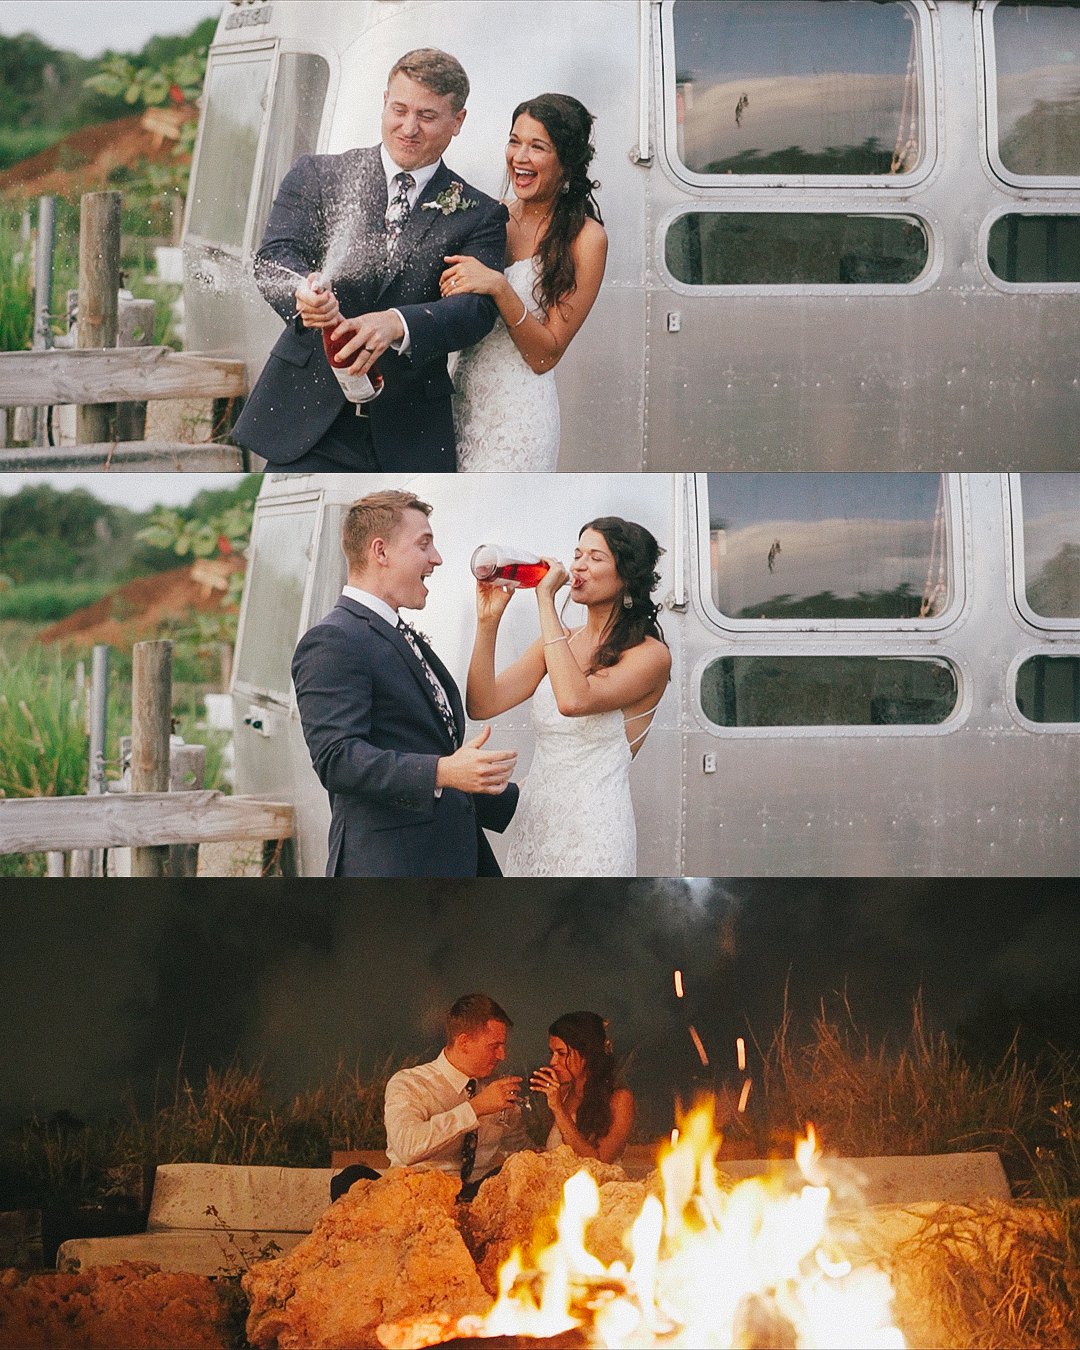 Elyssa and Jeff farm wedding in Florida - image 4